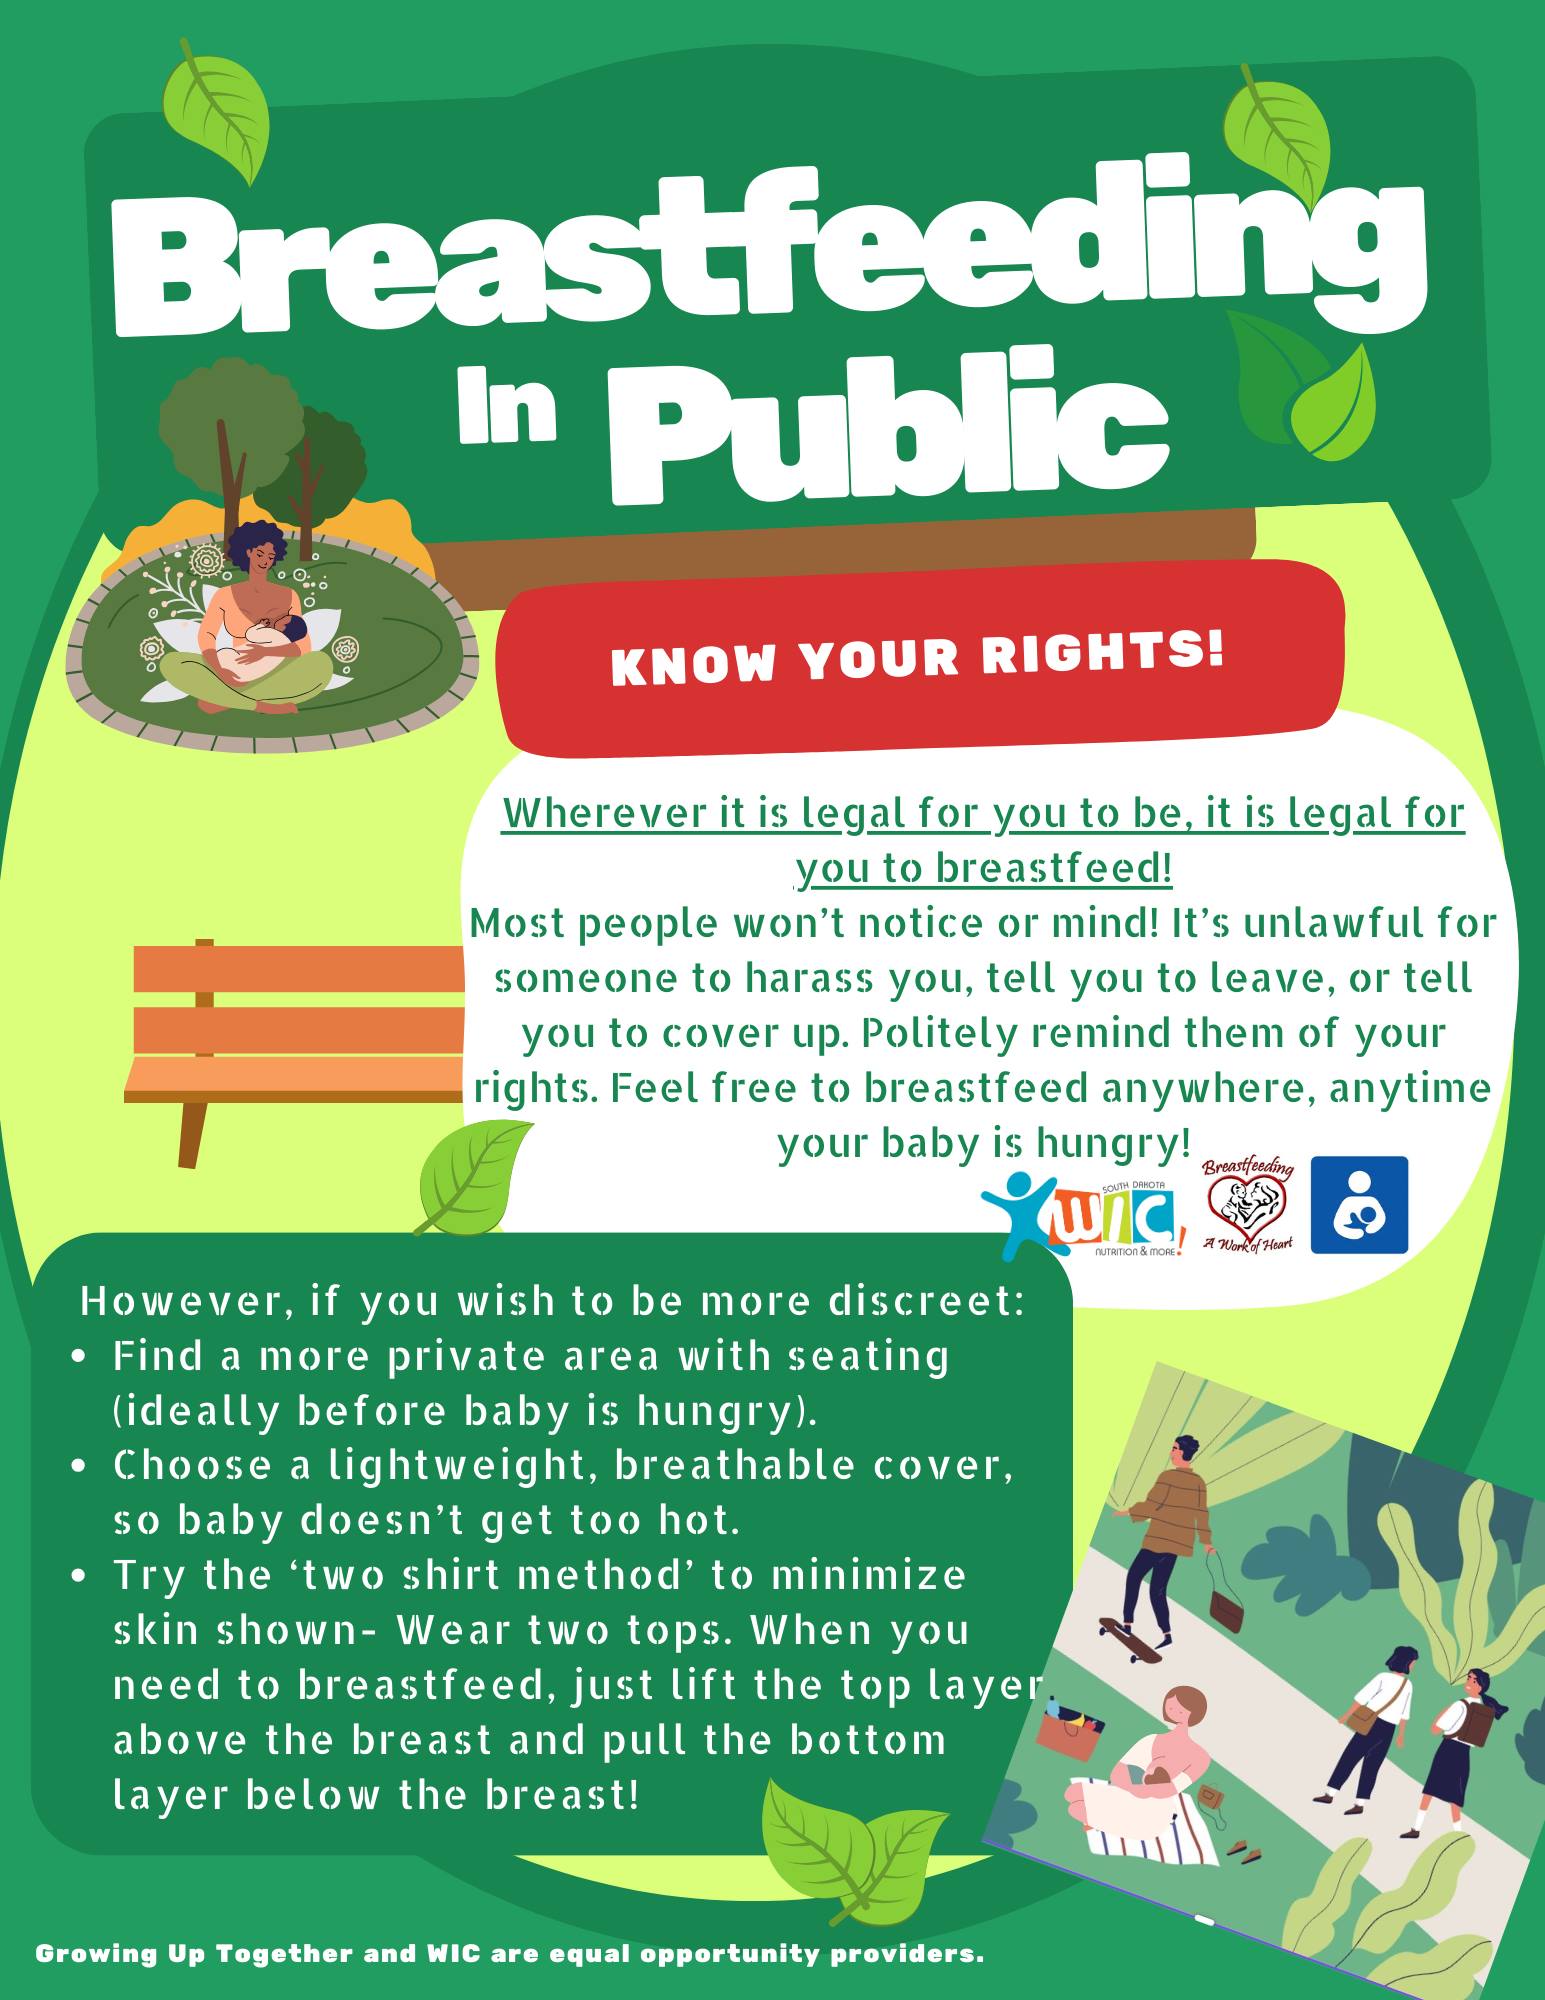 Breastfeeding Rights in Public.jpg